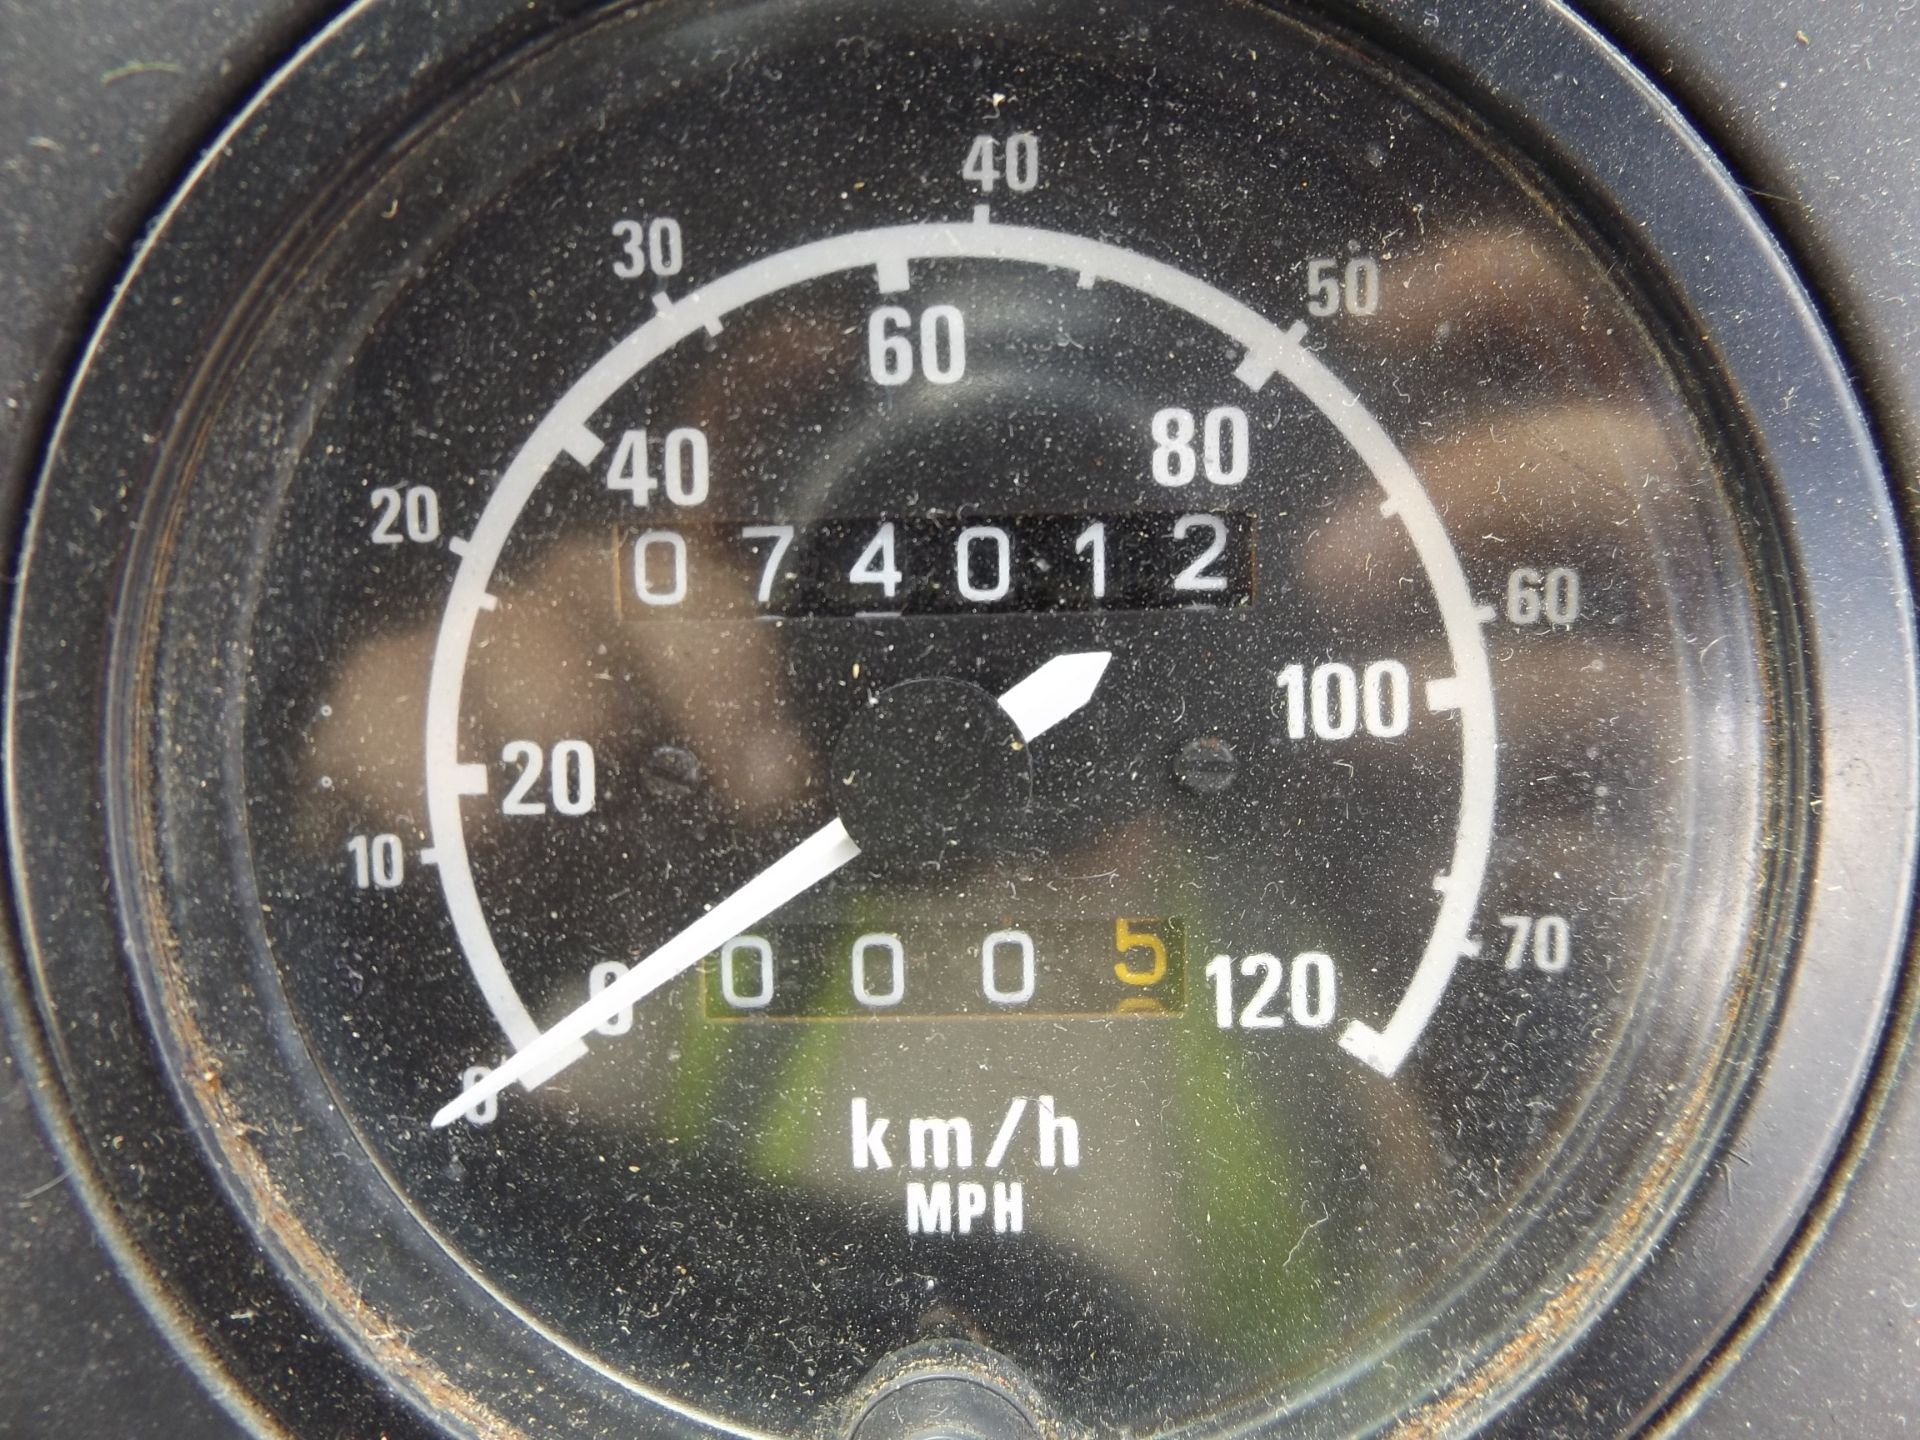 Leyland Daf 45/150 4 x 4 - Image 7 of 11